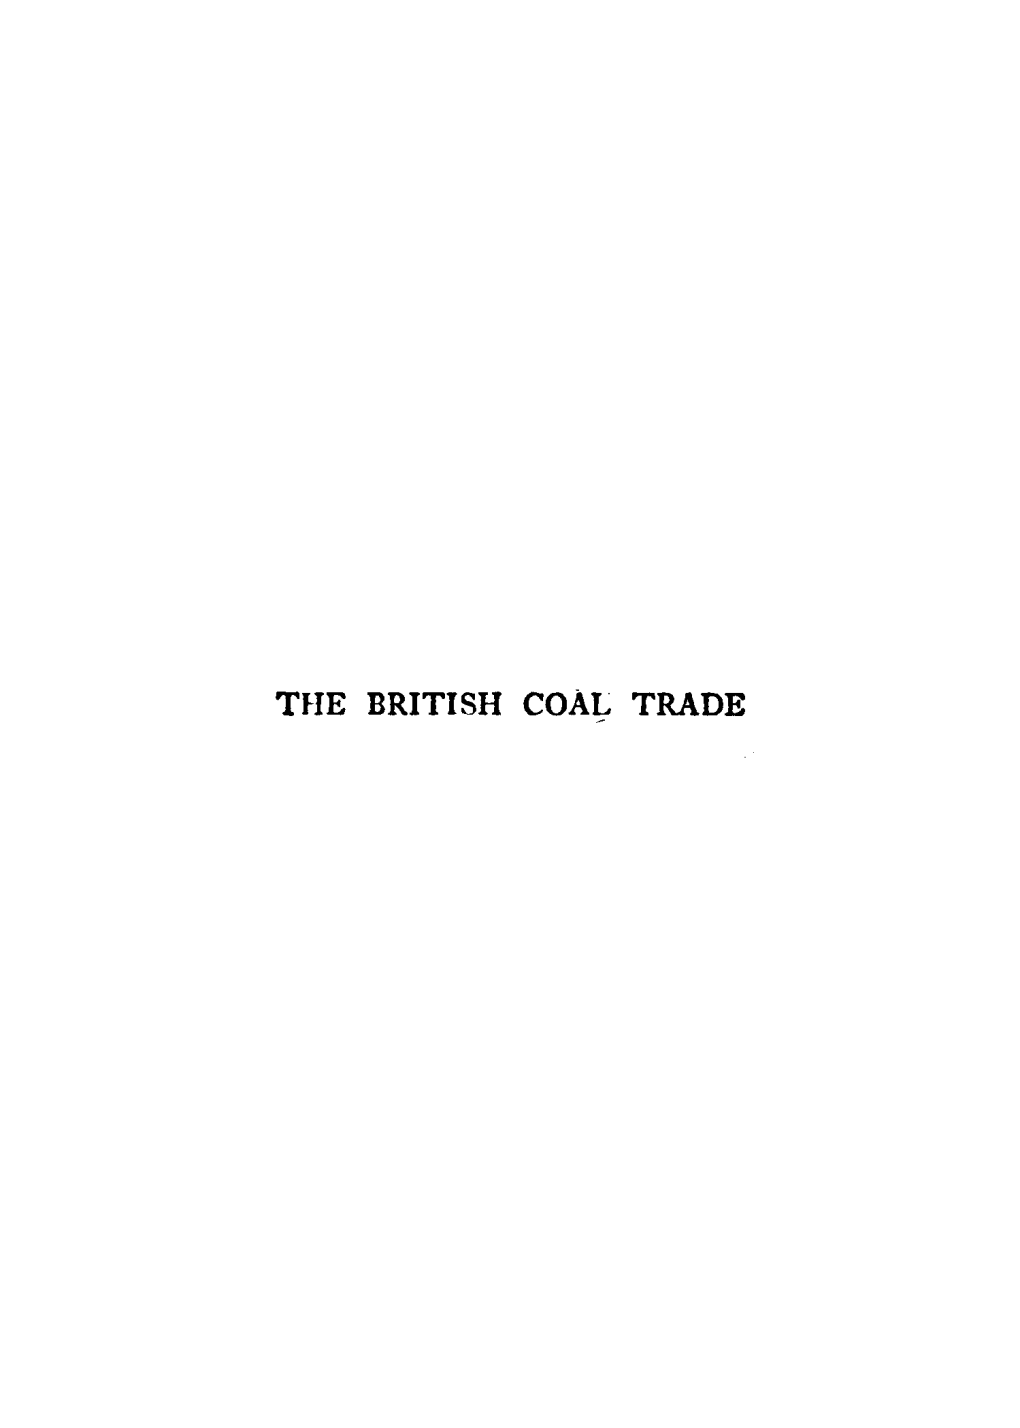 The British Coal Trade